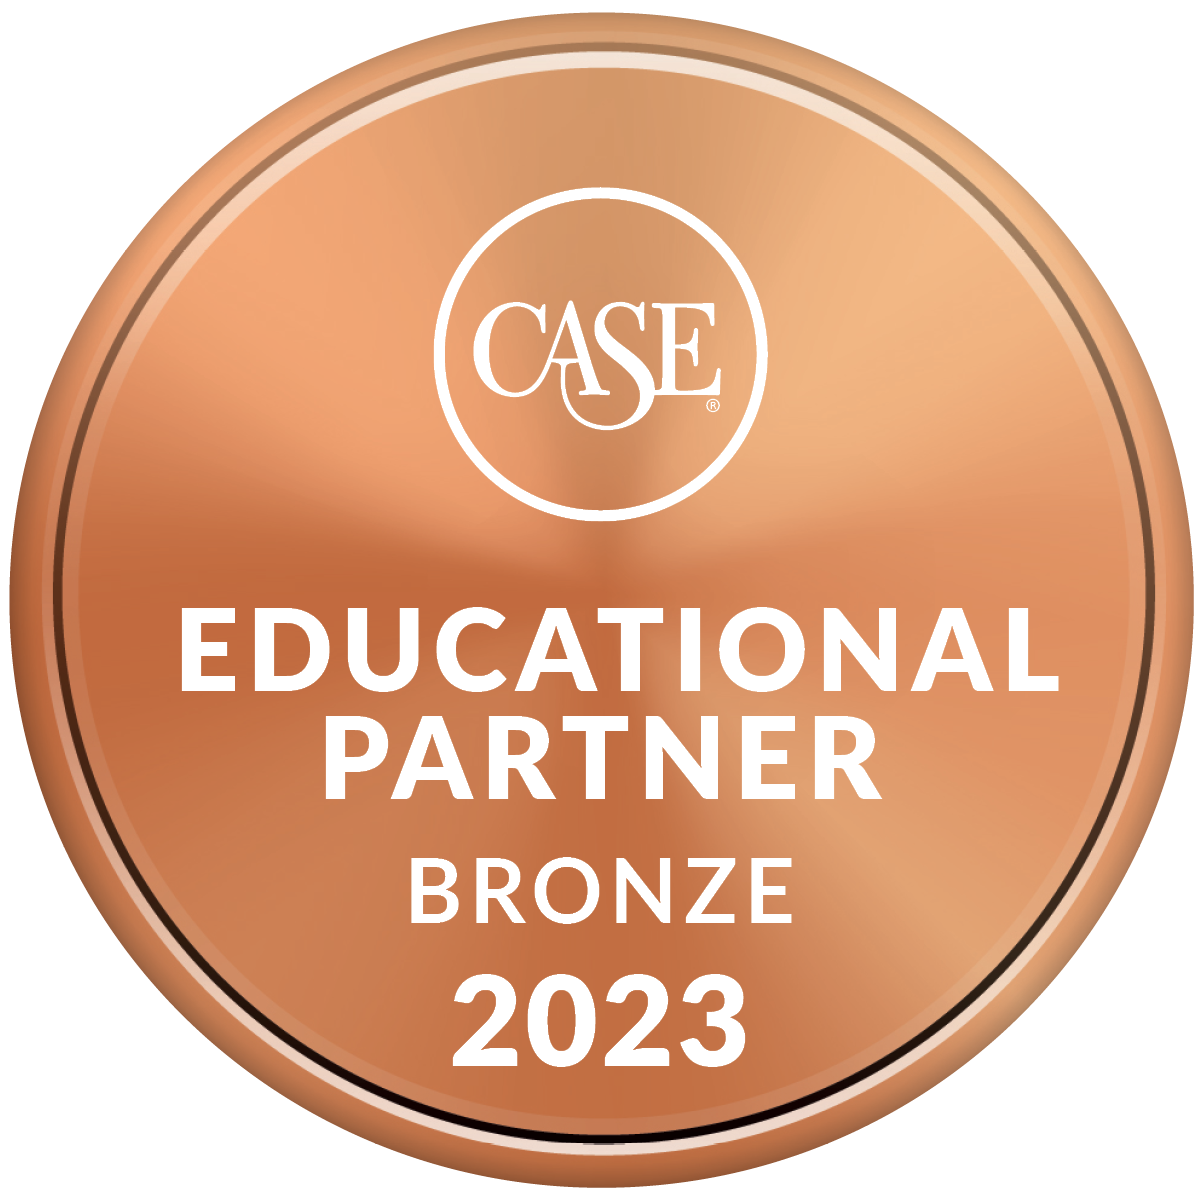 CASE Educational Partner Bronze 2023